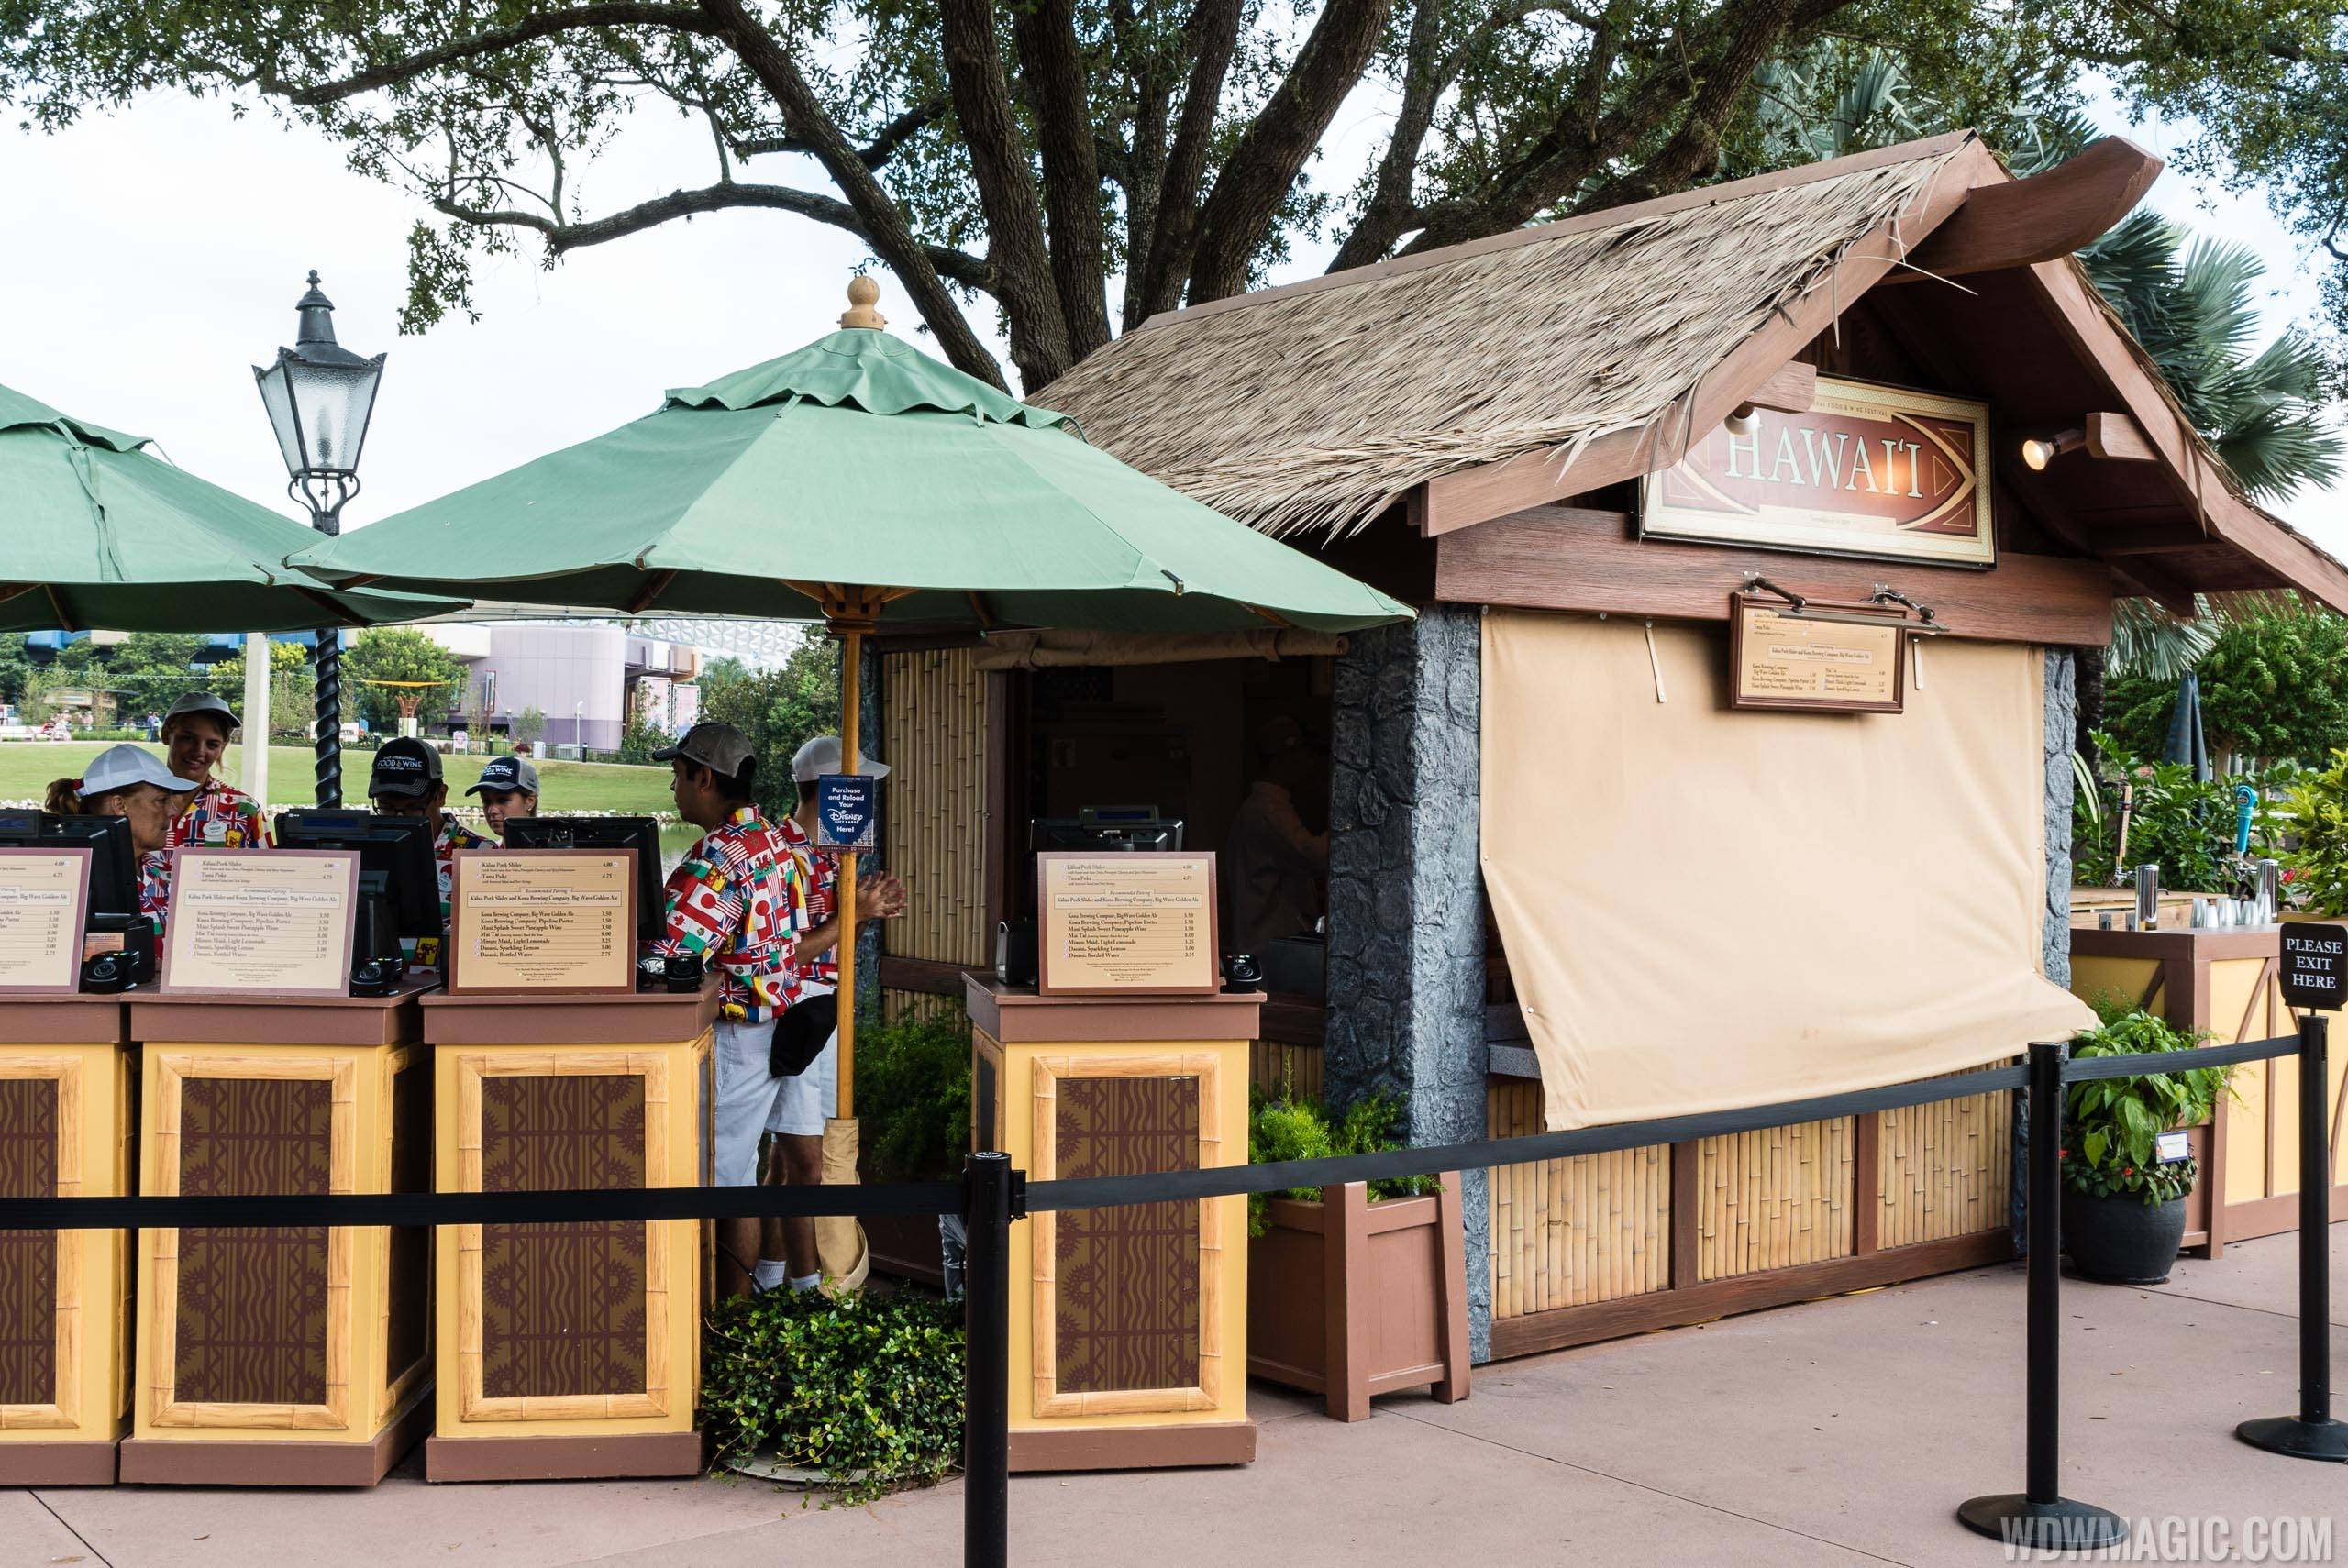 2015 Epcot Food and Wine Festival Marketplace kiosk - Hawai'i